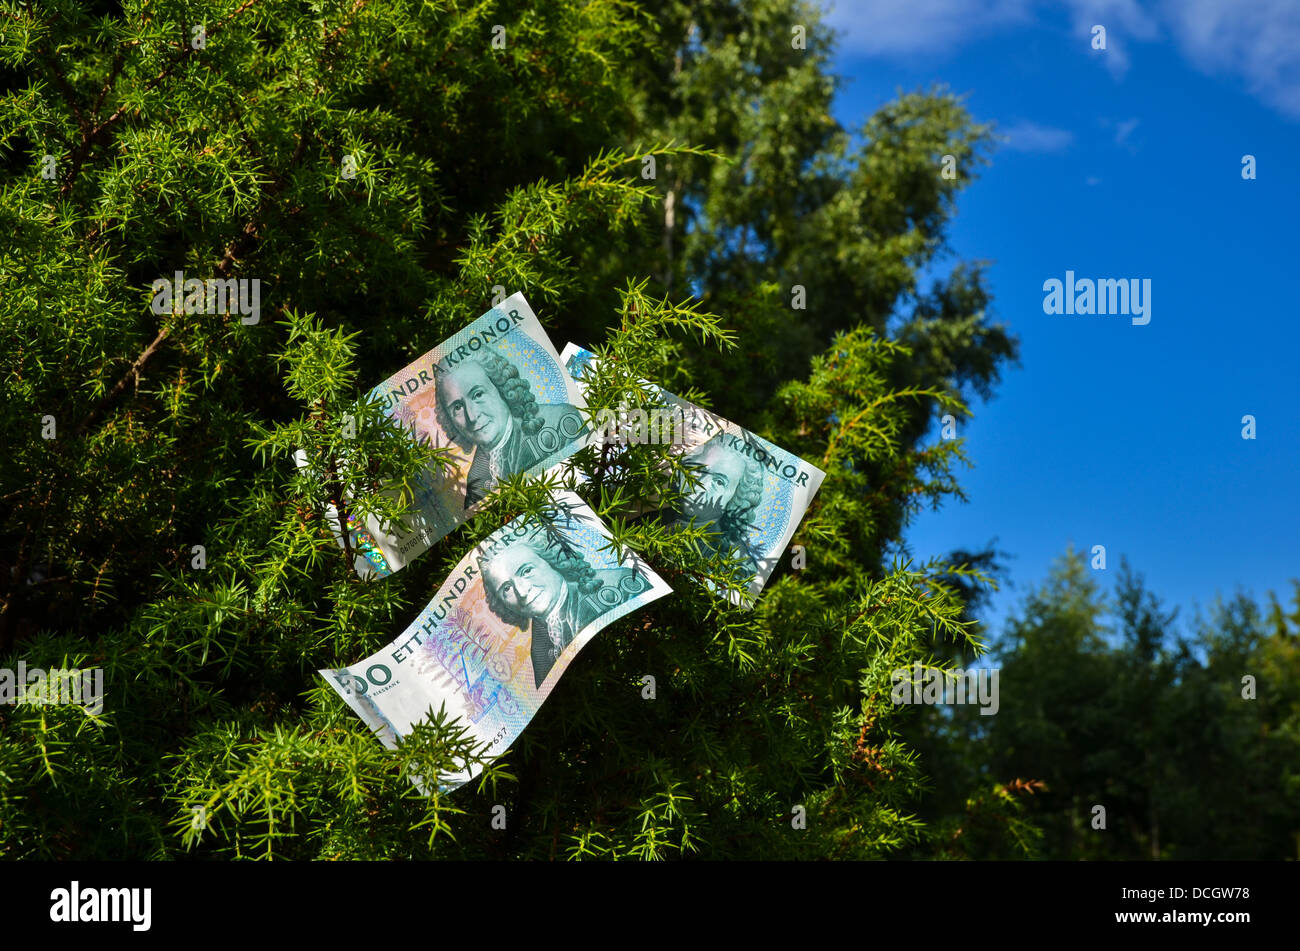 Swedish banknotes stuck in a juniper bush Stock Photo